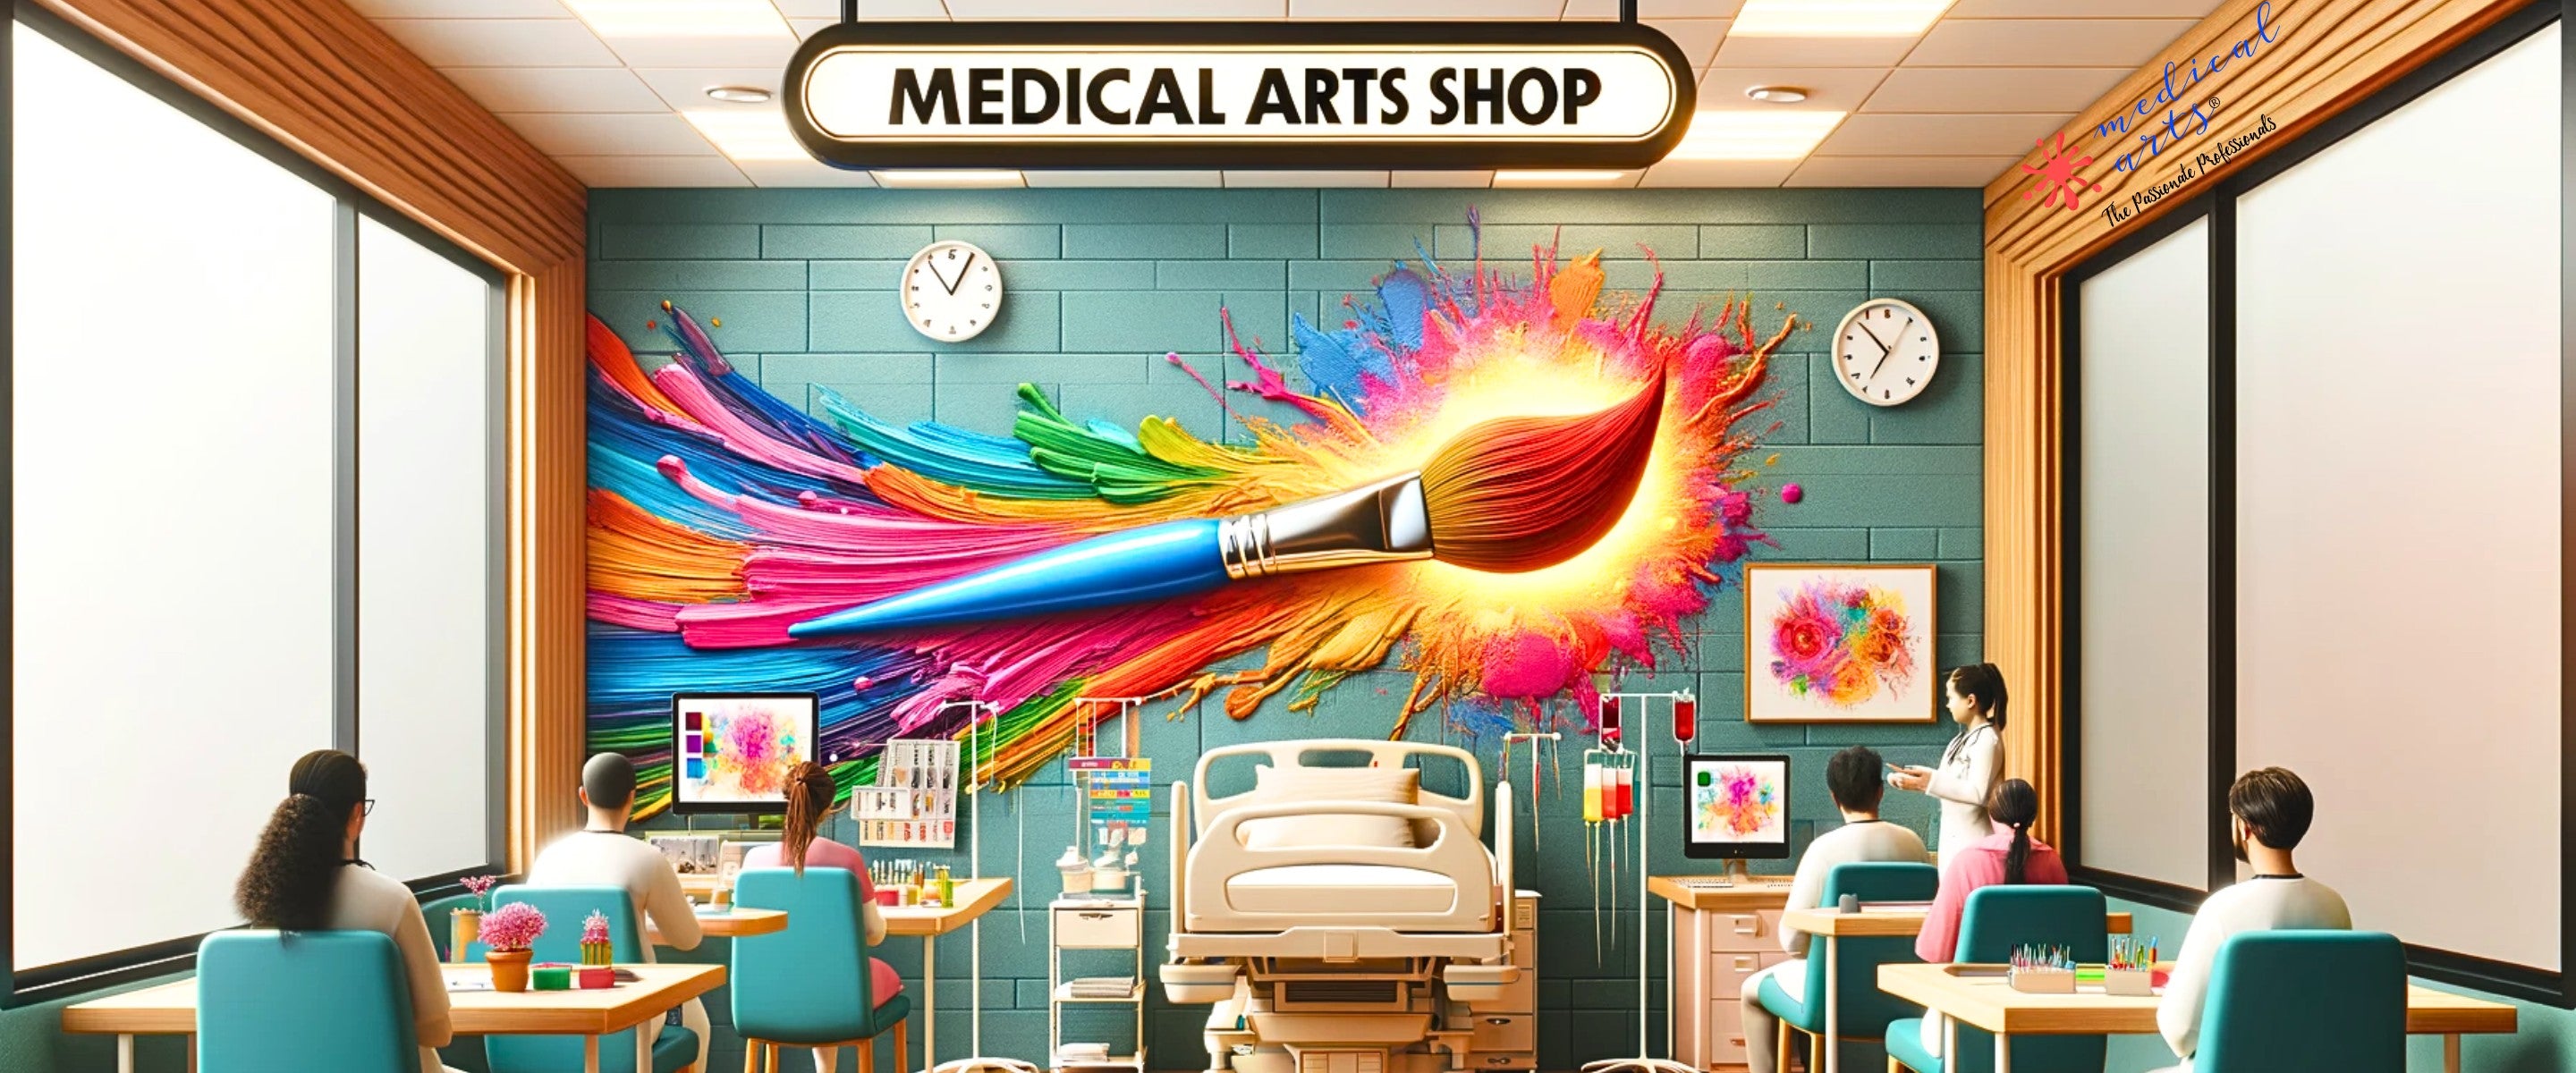 medical_arts_shop_-_medical_art_products_-_gift_for_doctors_gift_for_nurses